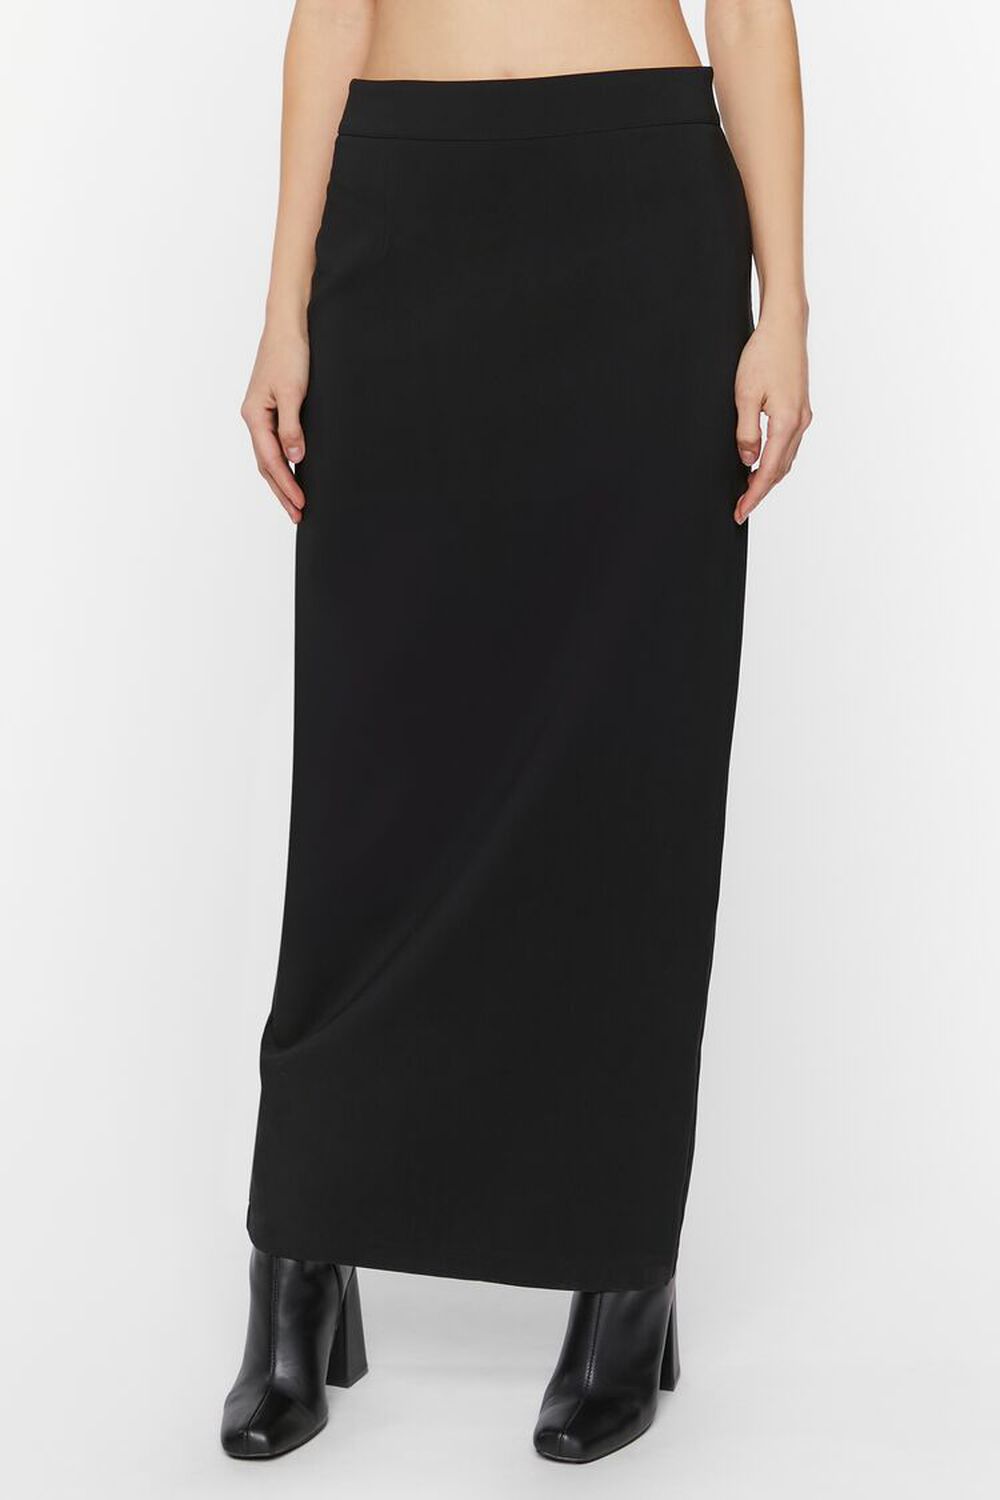 BLACK Zip-Slit Maxi Skirt, image 2